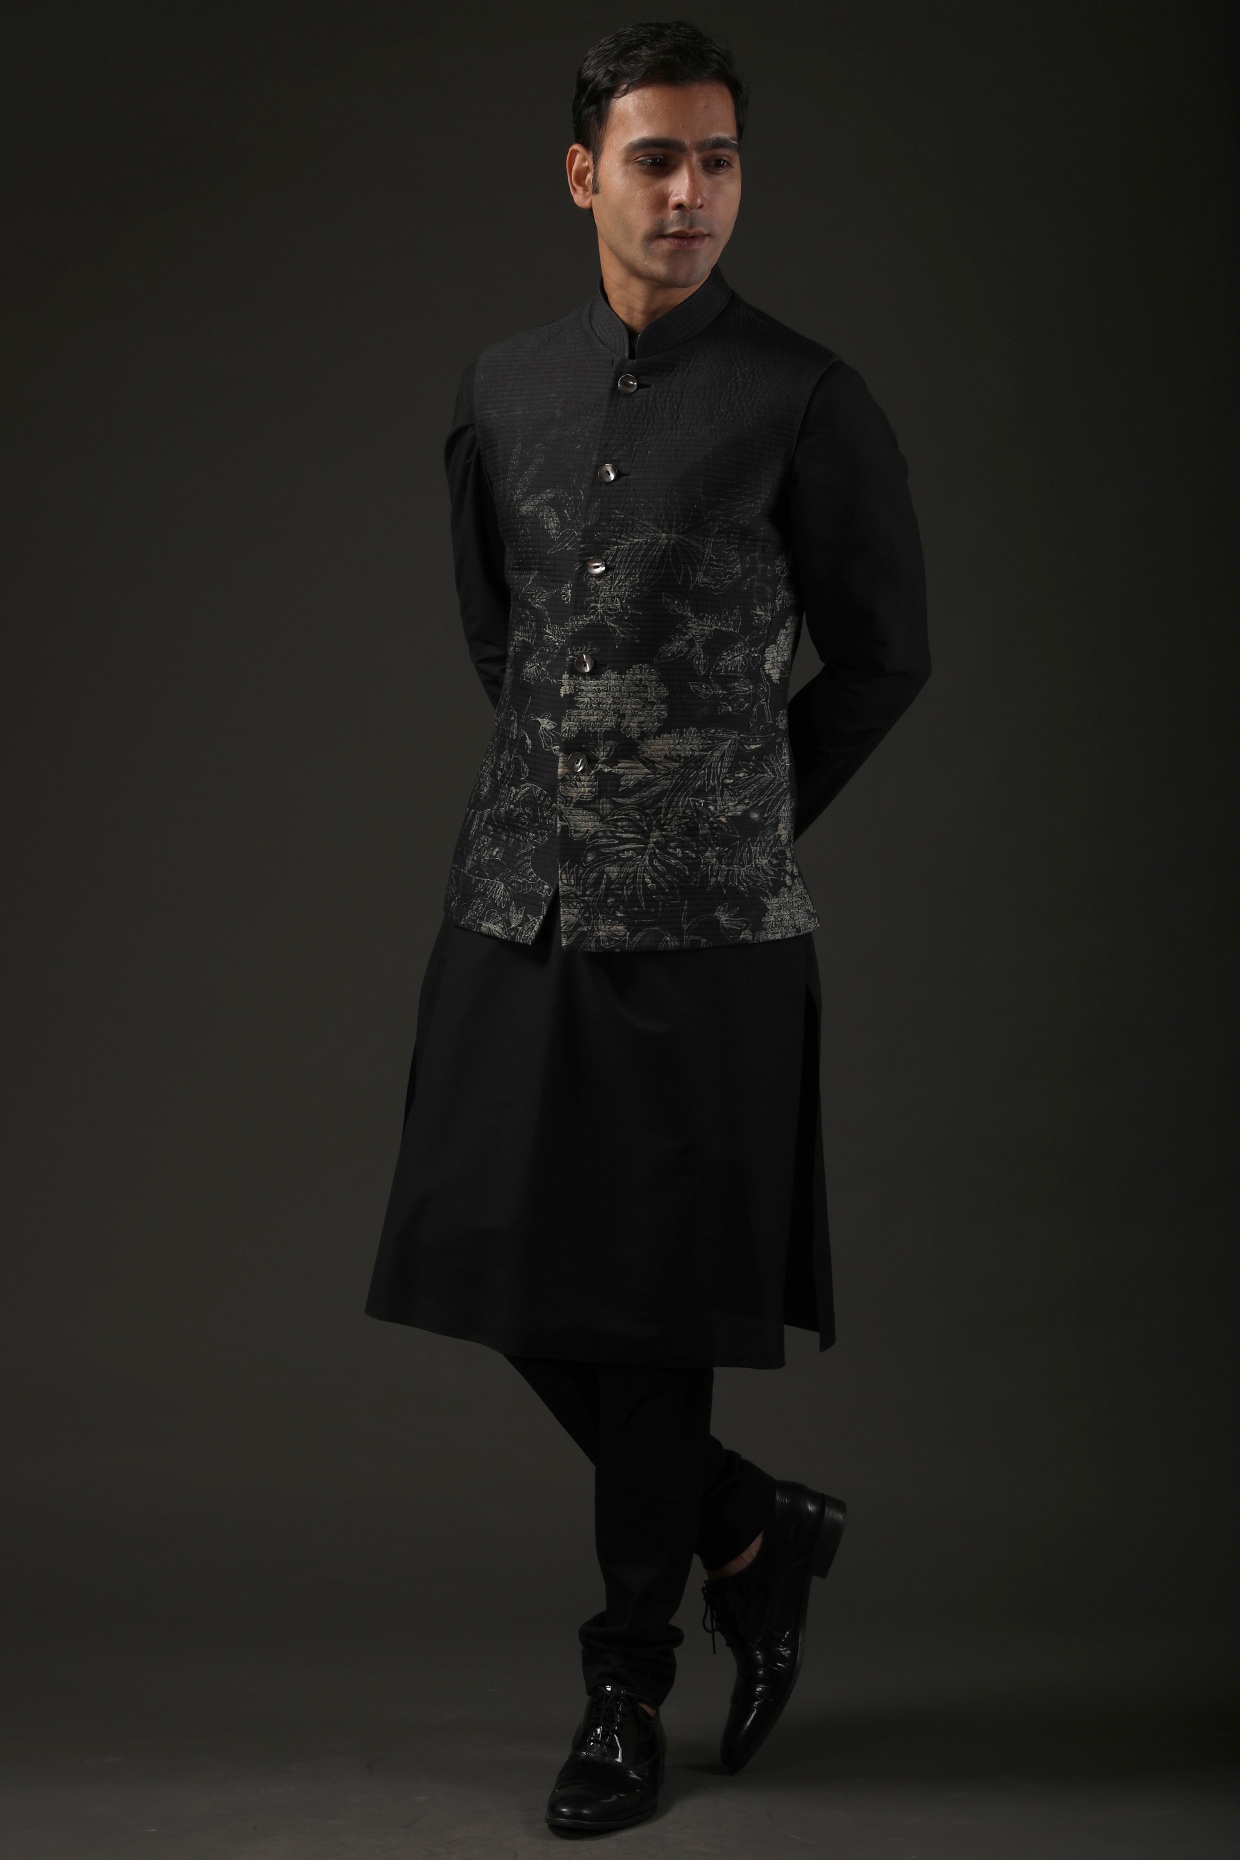 Men's Black Cotton Blend Printed Nehru Jackets at Rs 3085.00 | Nehru Jacket  | ID: 2851587500112